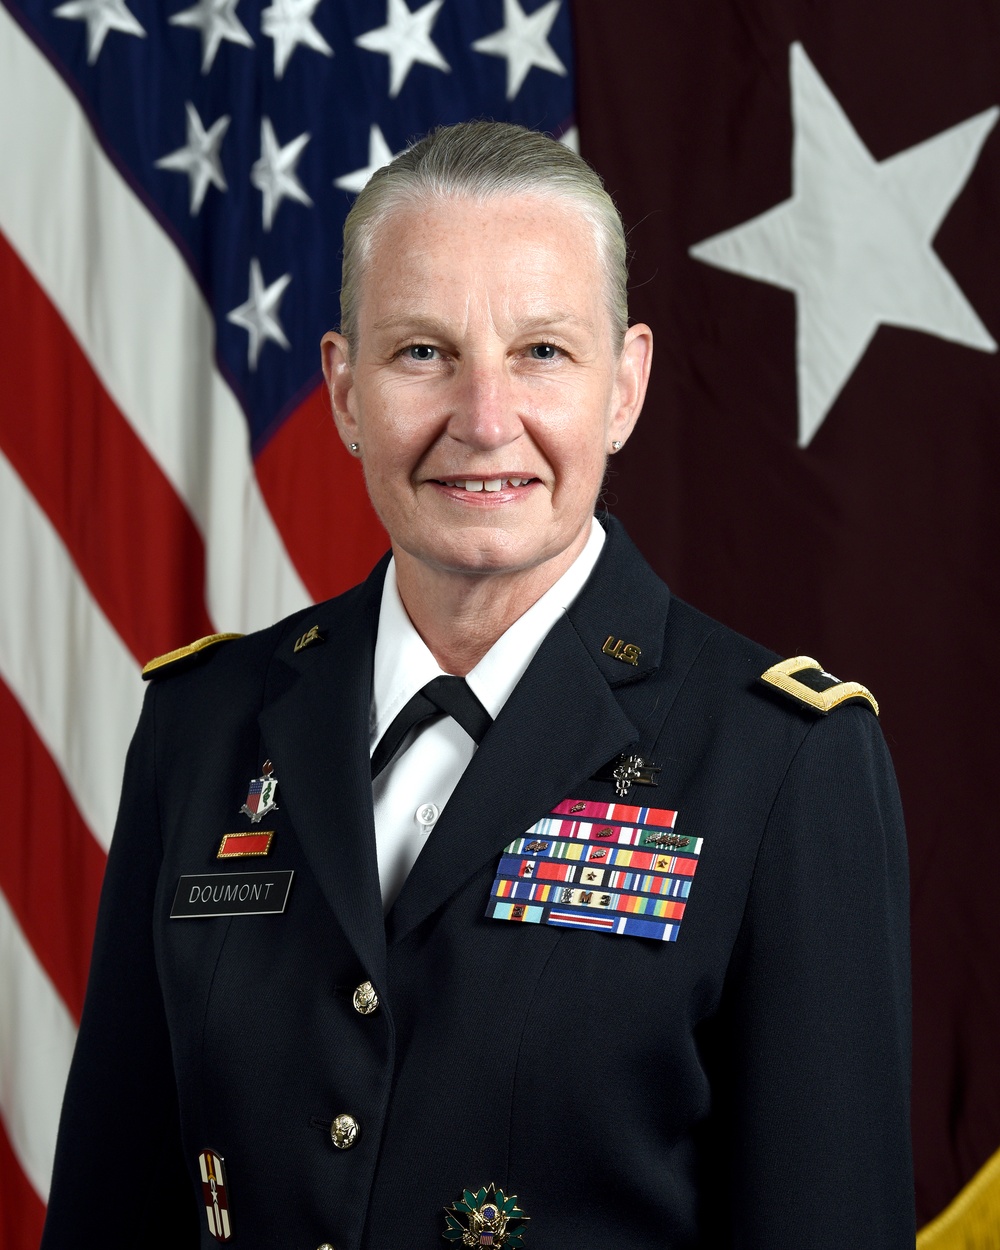 U.S. Army Brig. Gen. Lisa L. Doumont